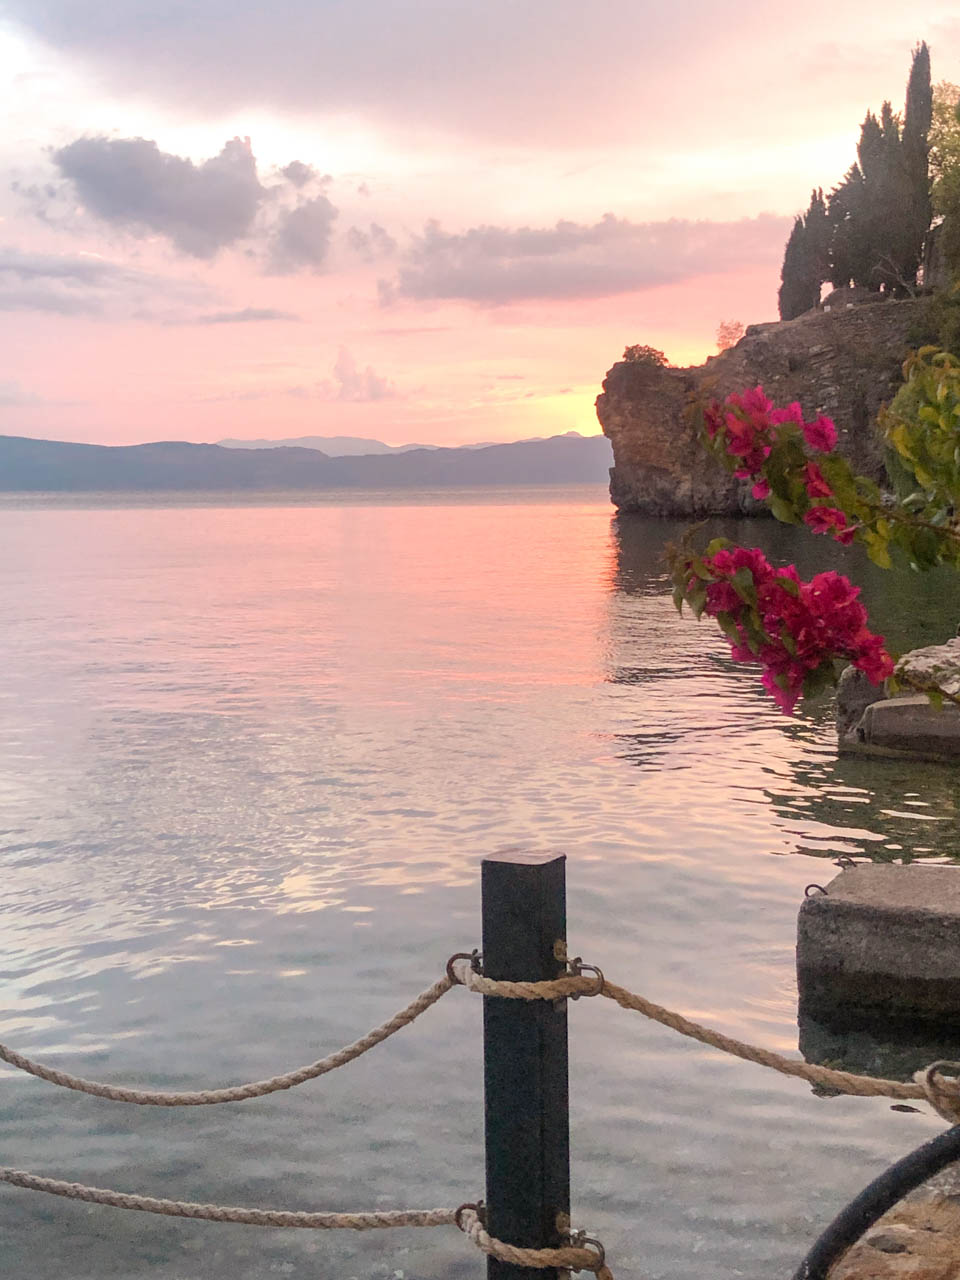 Sunset over Lake Ohrid in North Macedonia